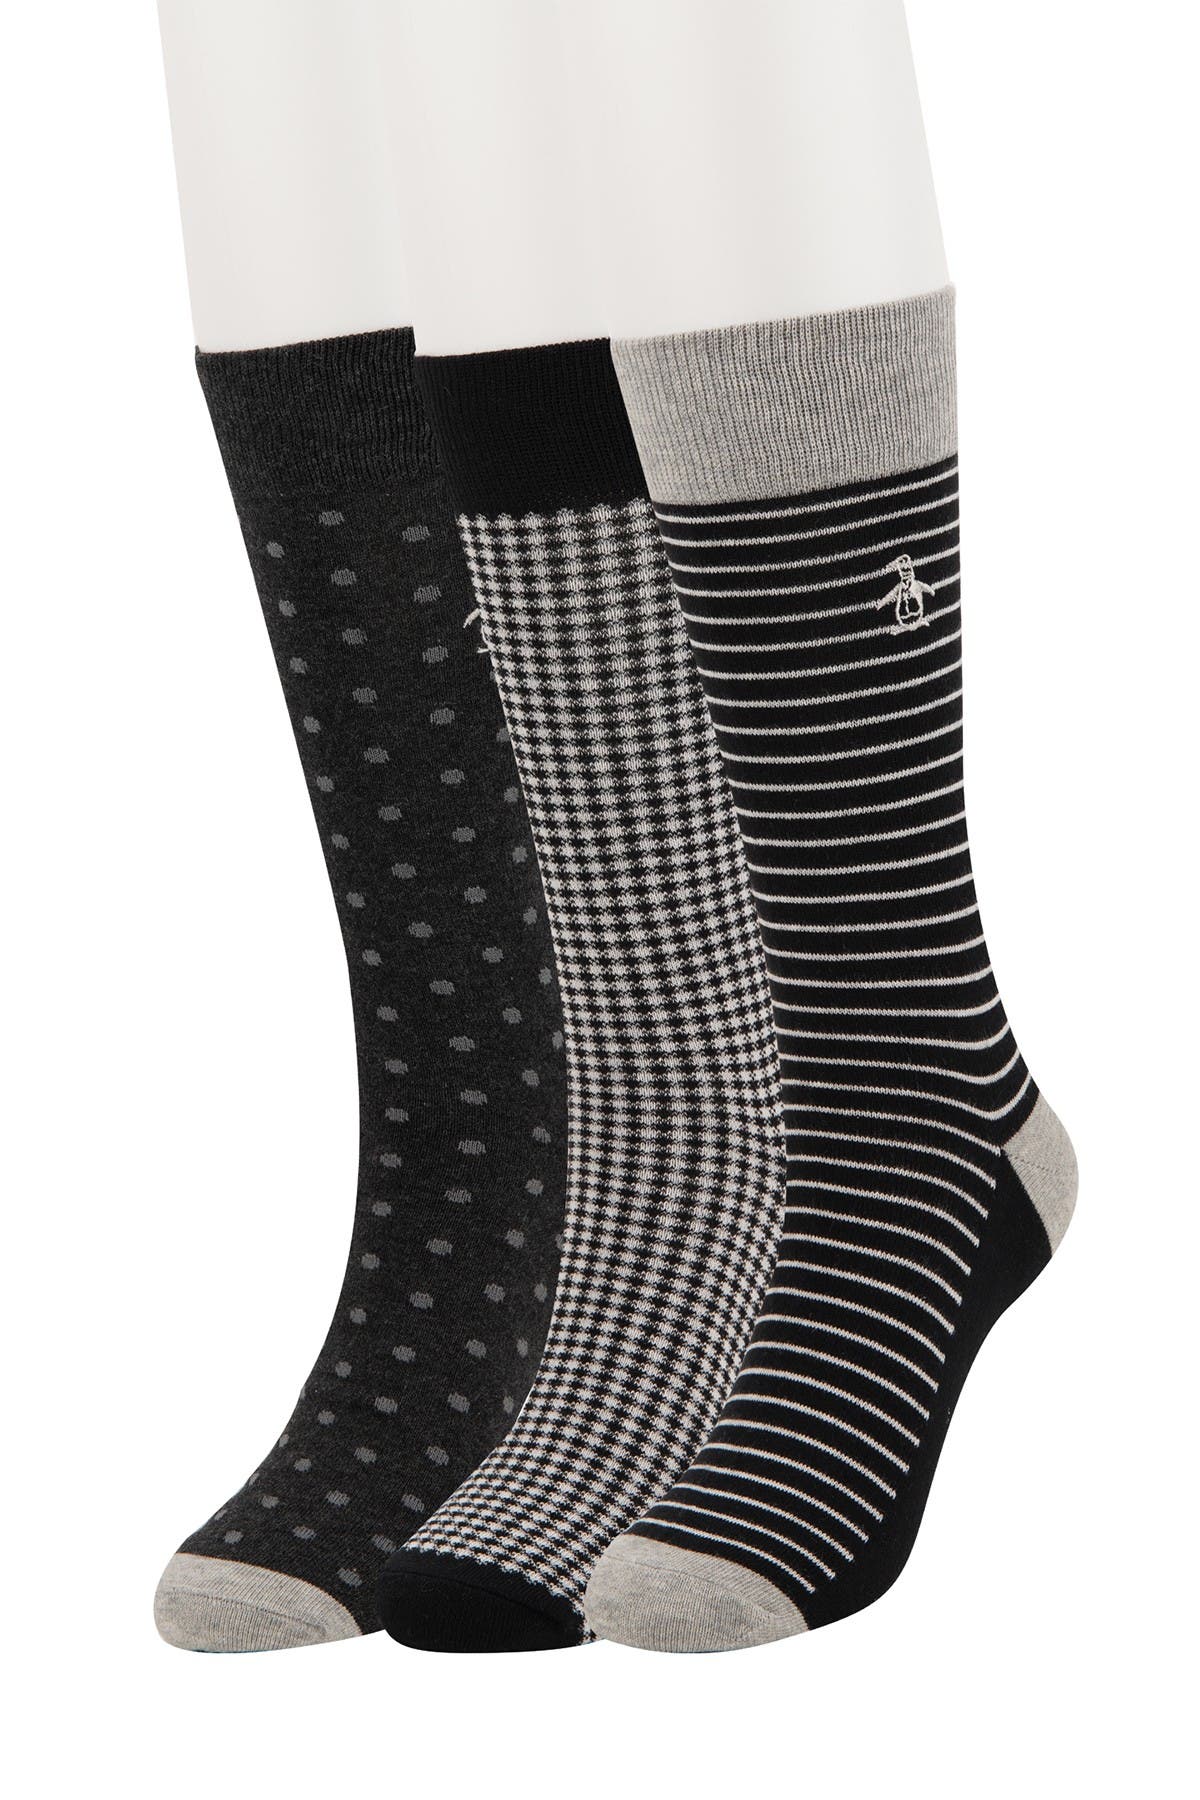 Nordstrom Rack Mens Pack Of 3 Black Grey Dress Socks Sz 6.5-12 0417 